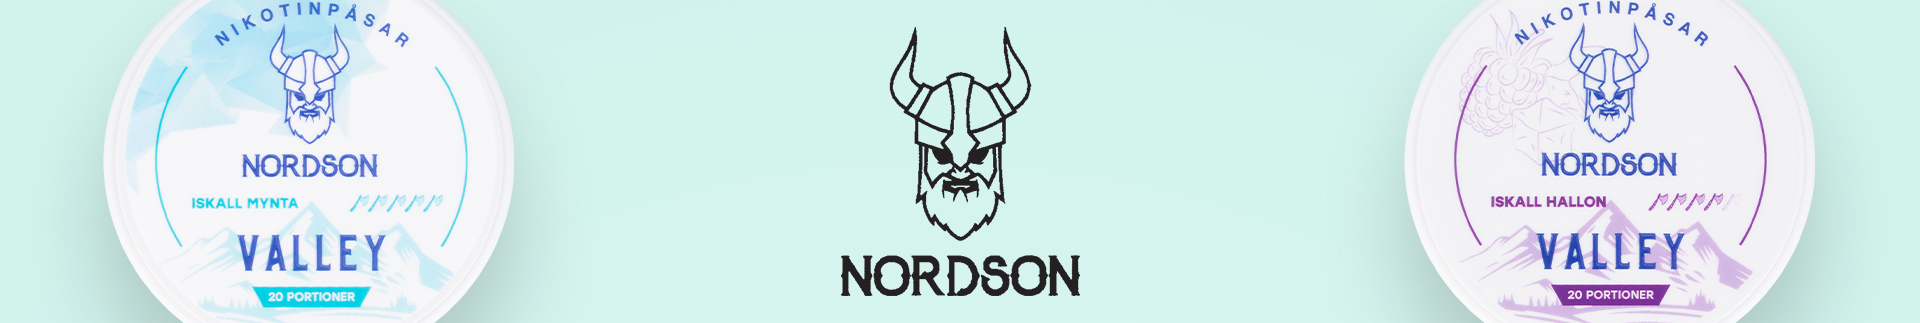 Nordson